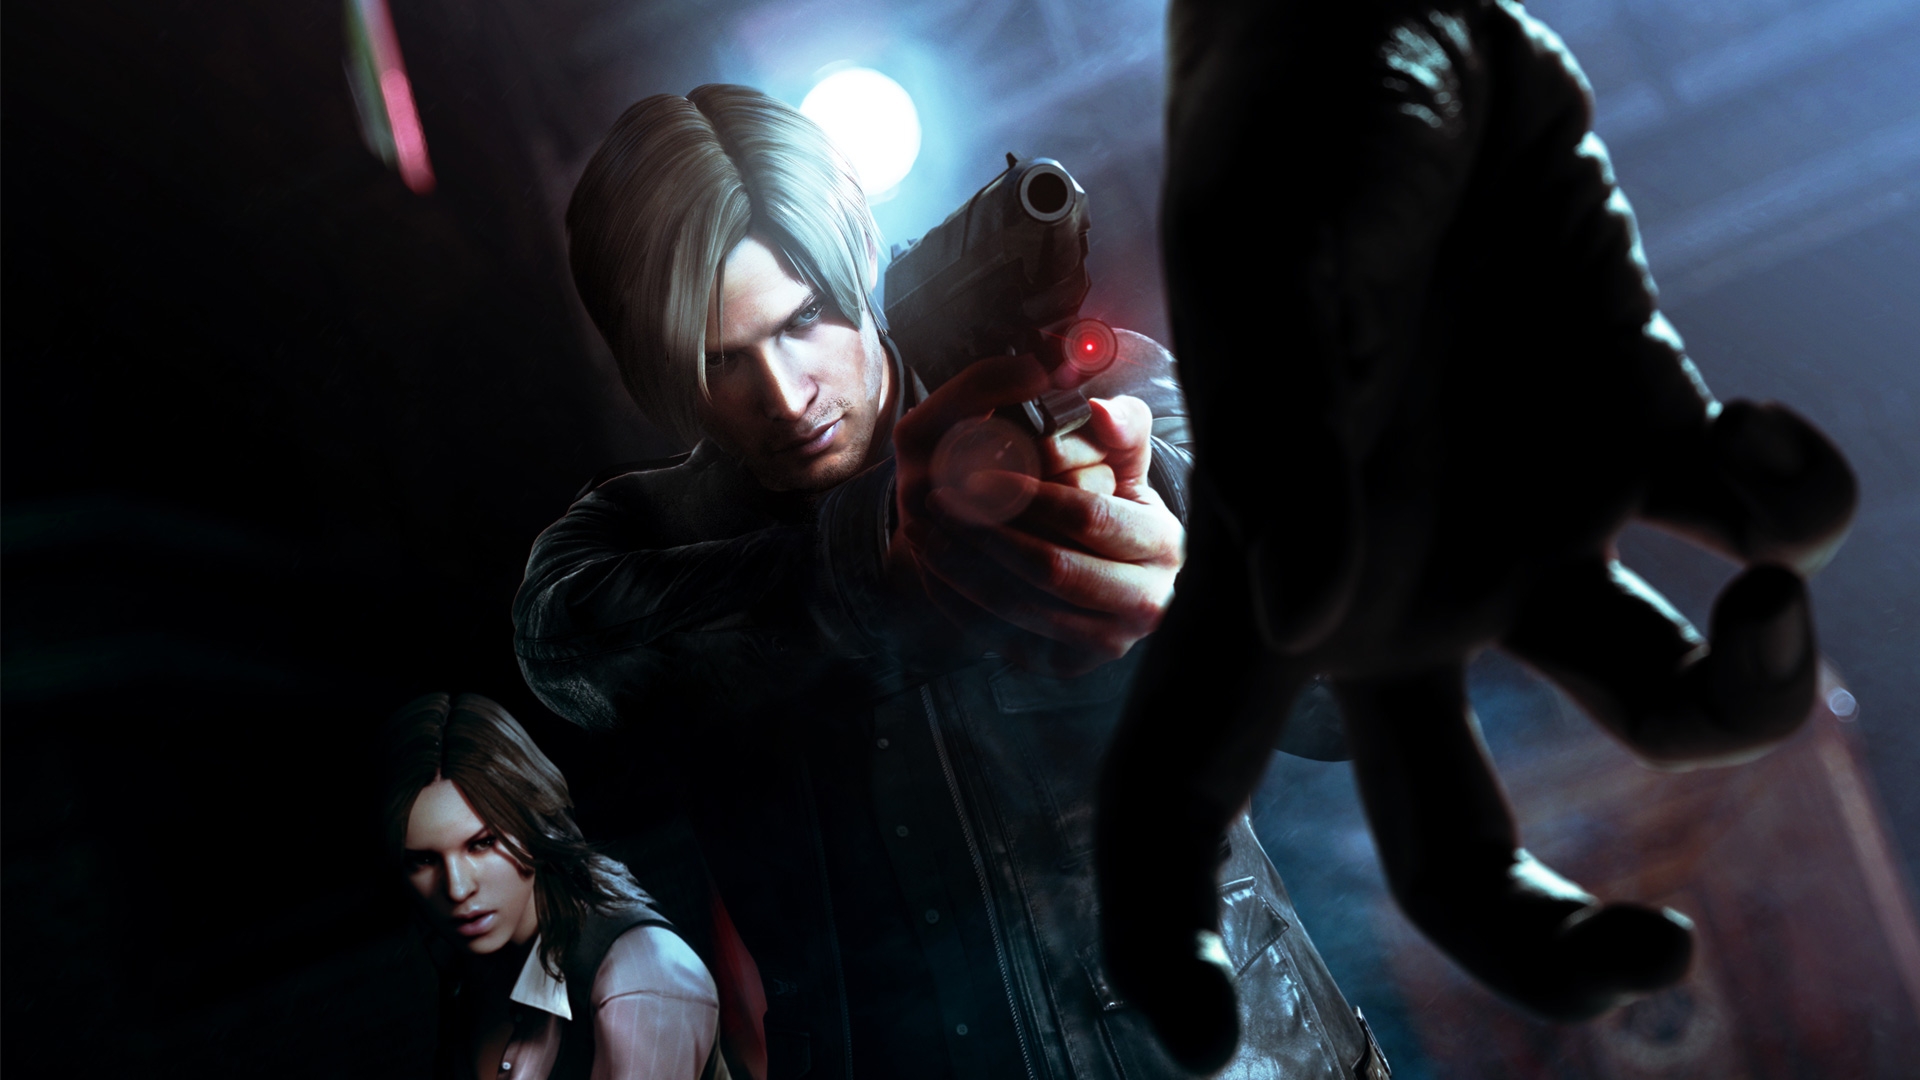 Resident Evil 6, скорее всего, выйдет на PS4 и Xbox One.